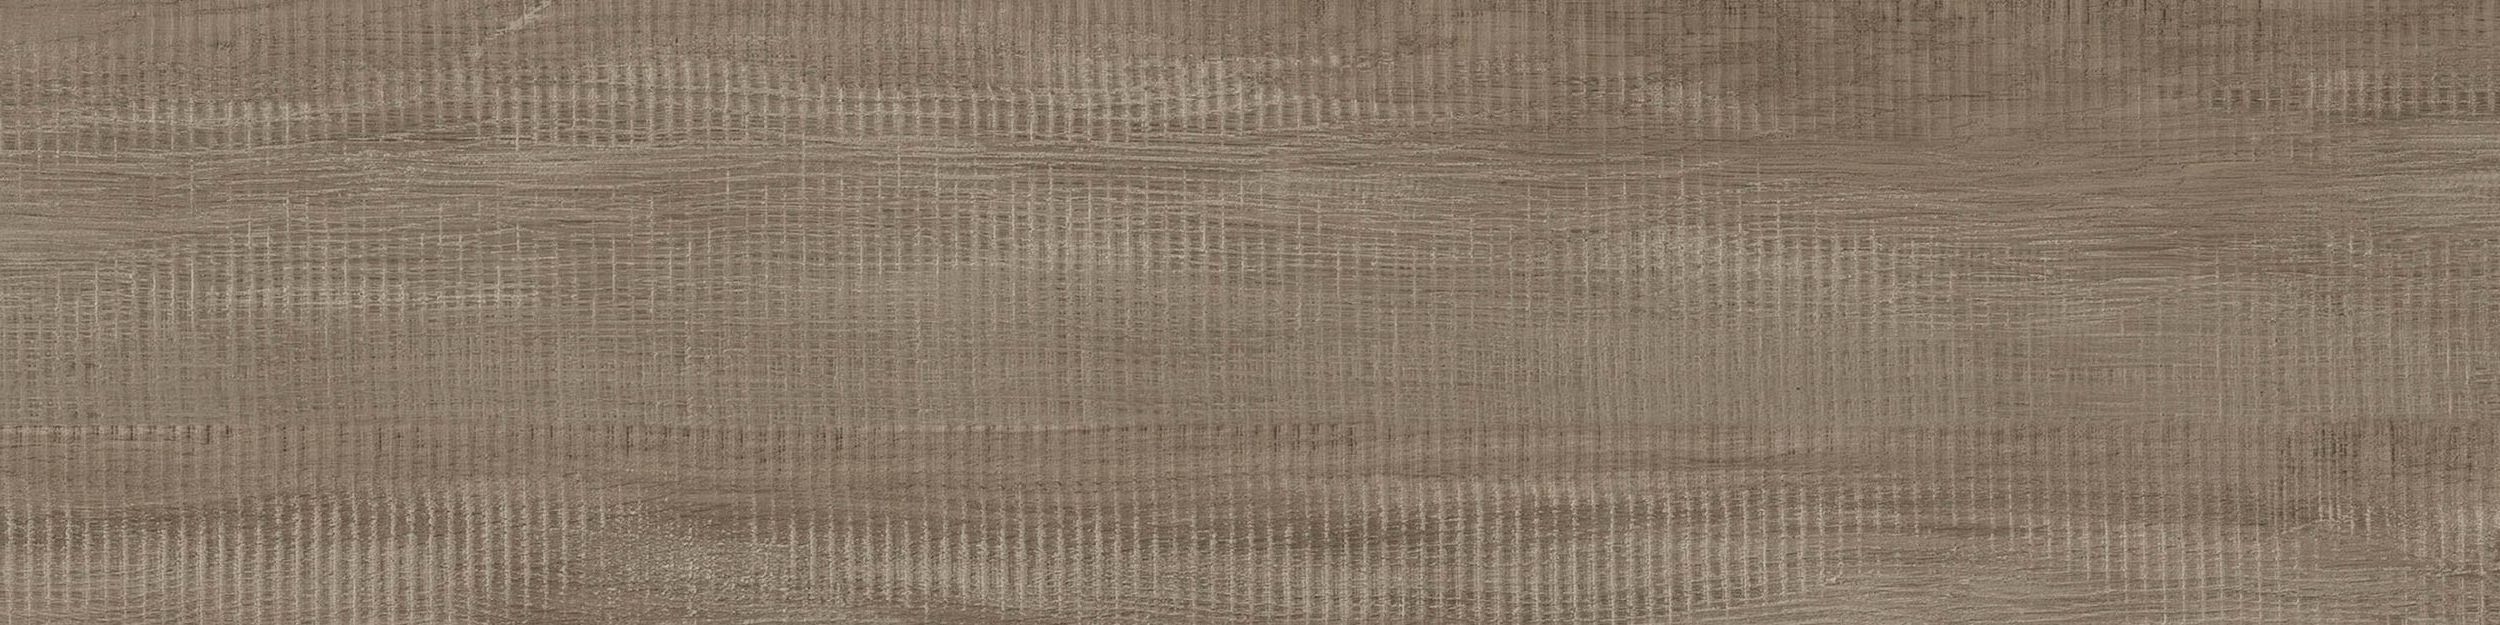 Textured Woodgrains LVT In Rustic Hickory imagen número 1